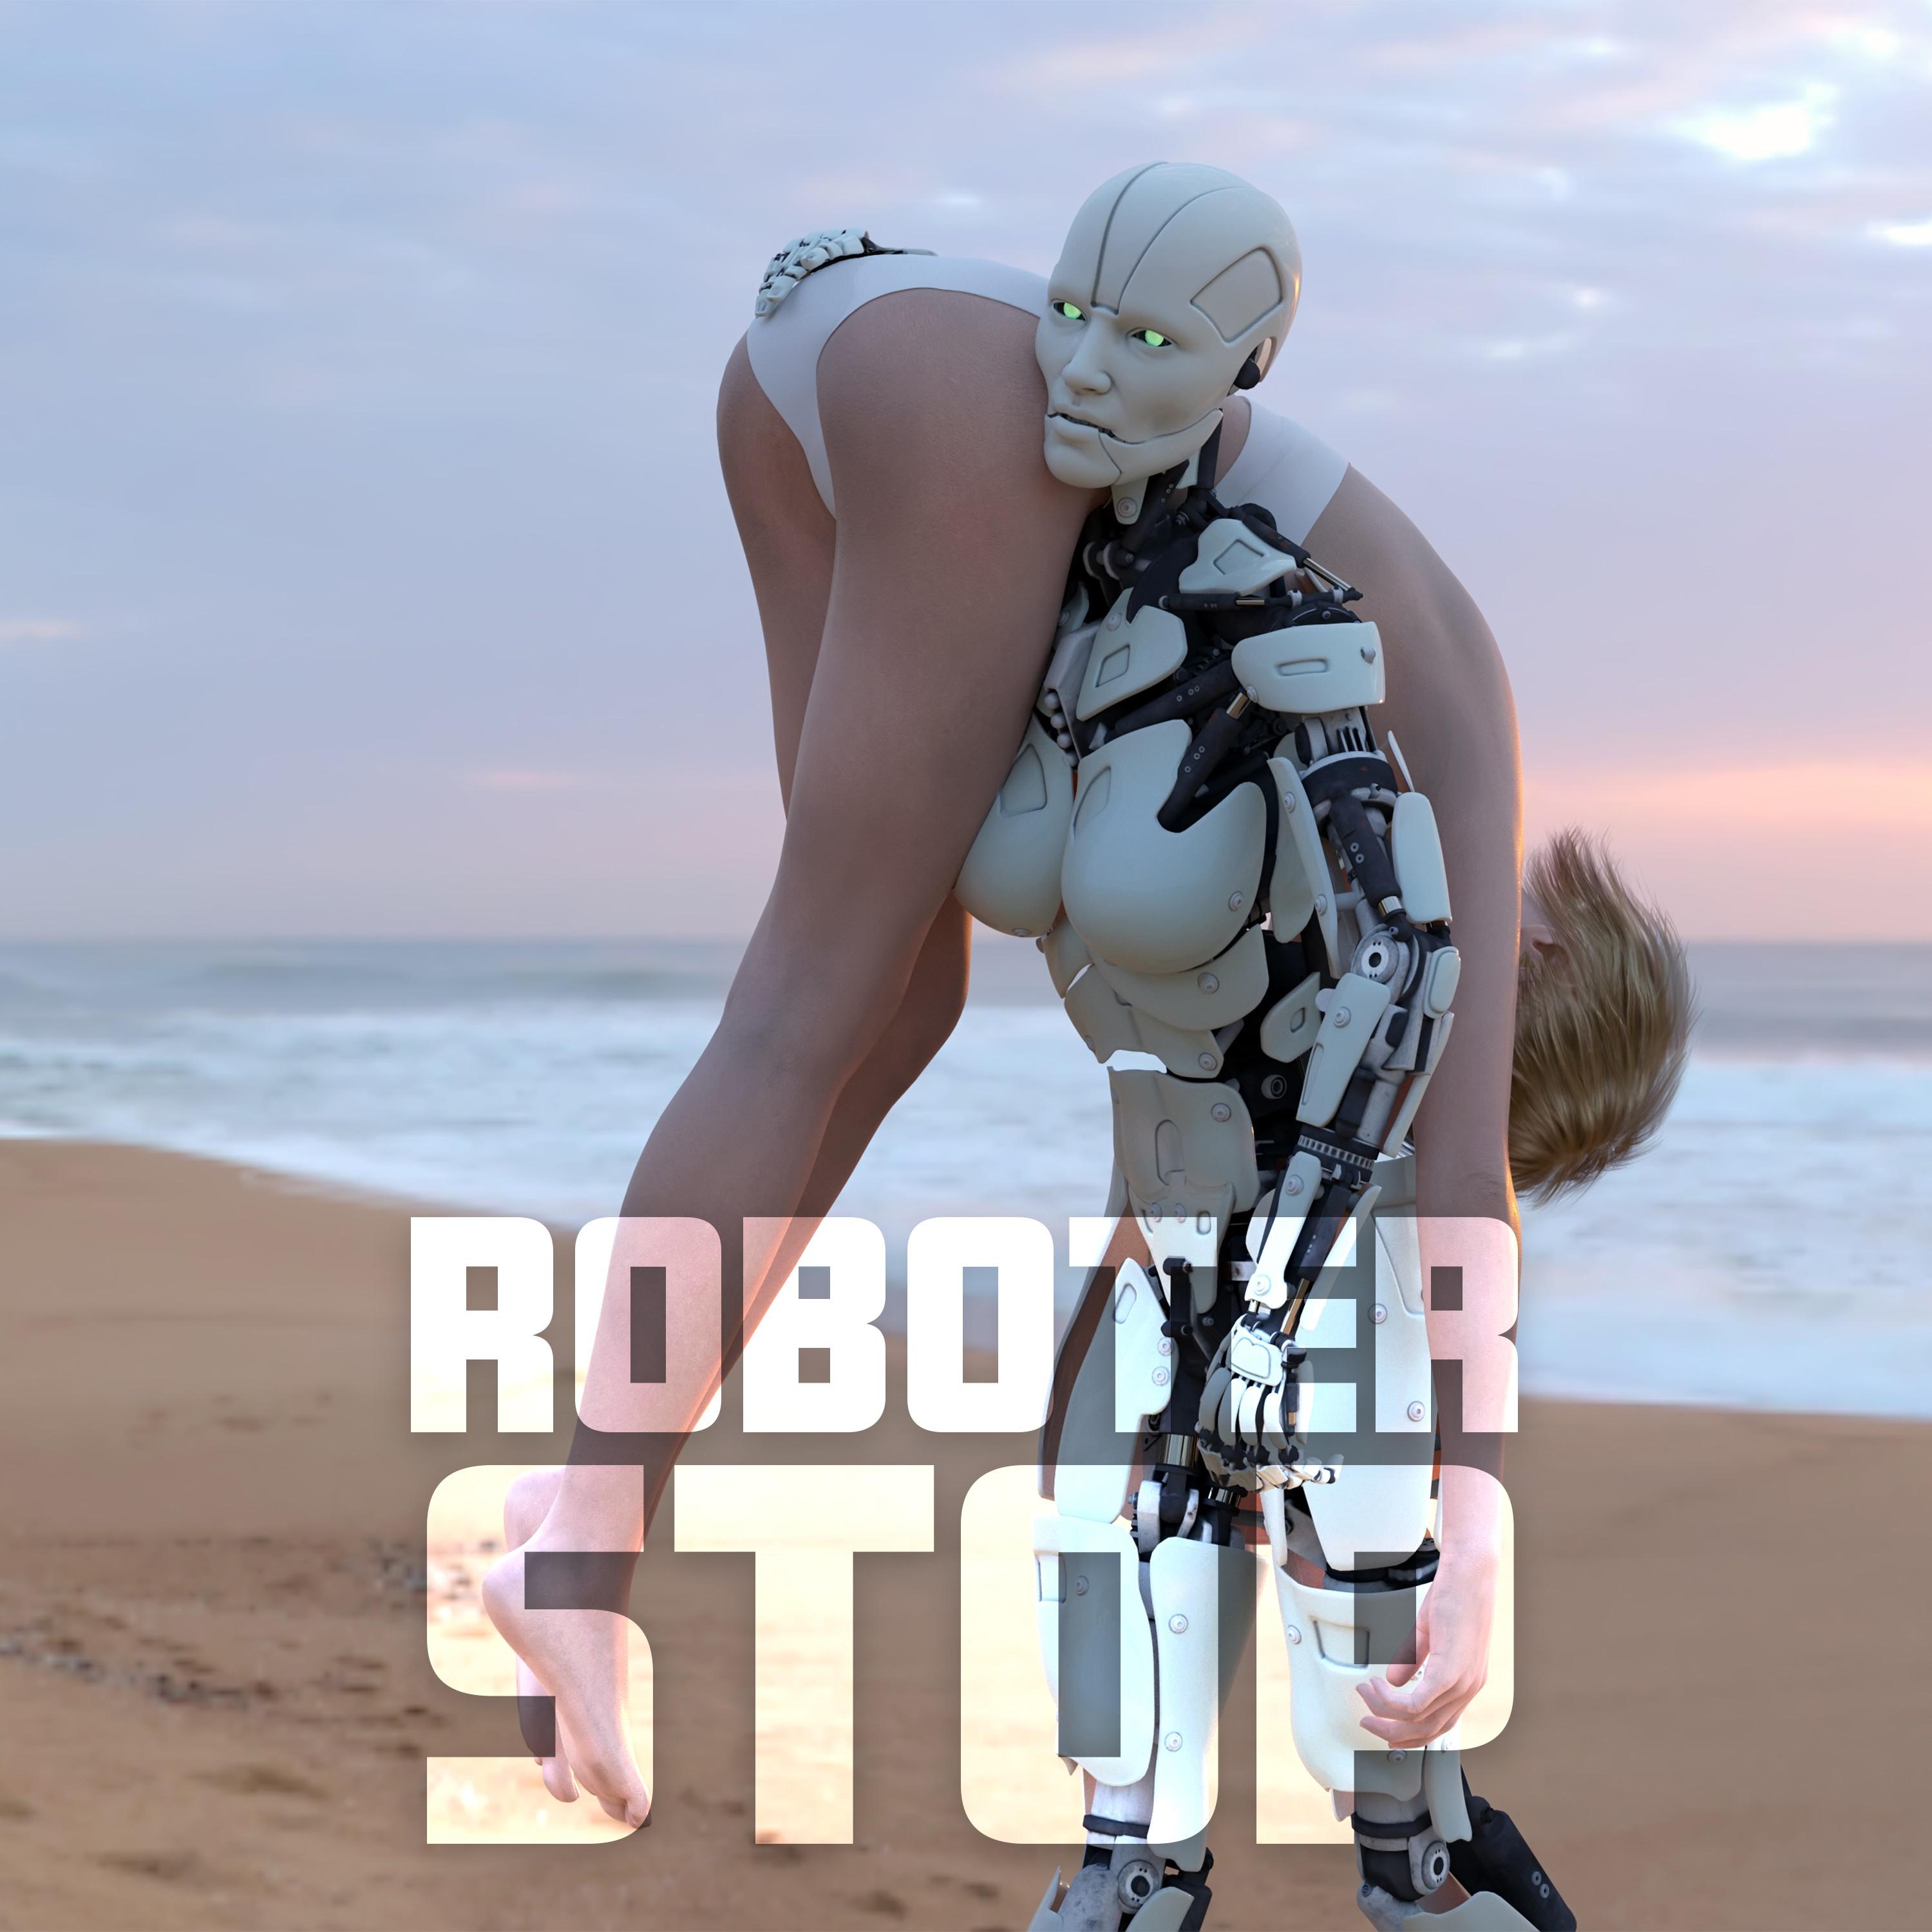 Roboter - Stop War (Opz Instrumental)